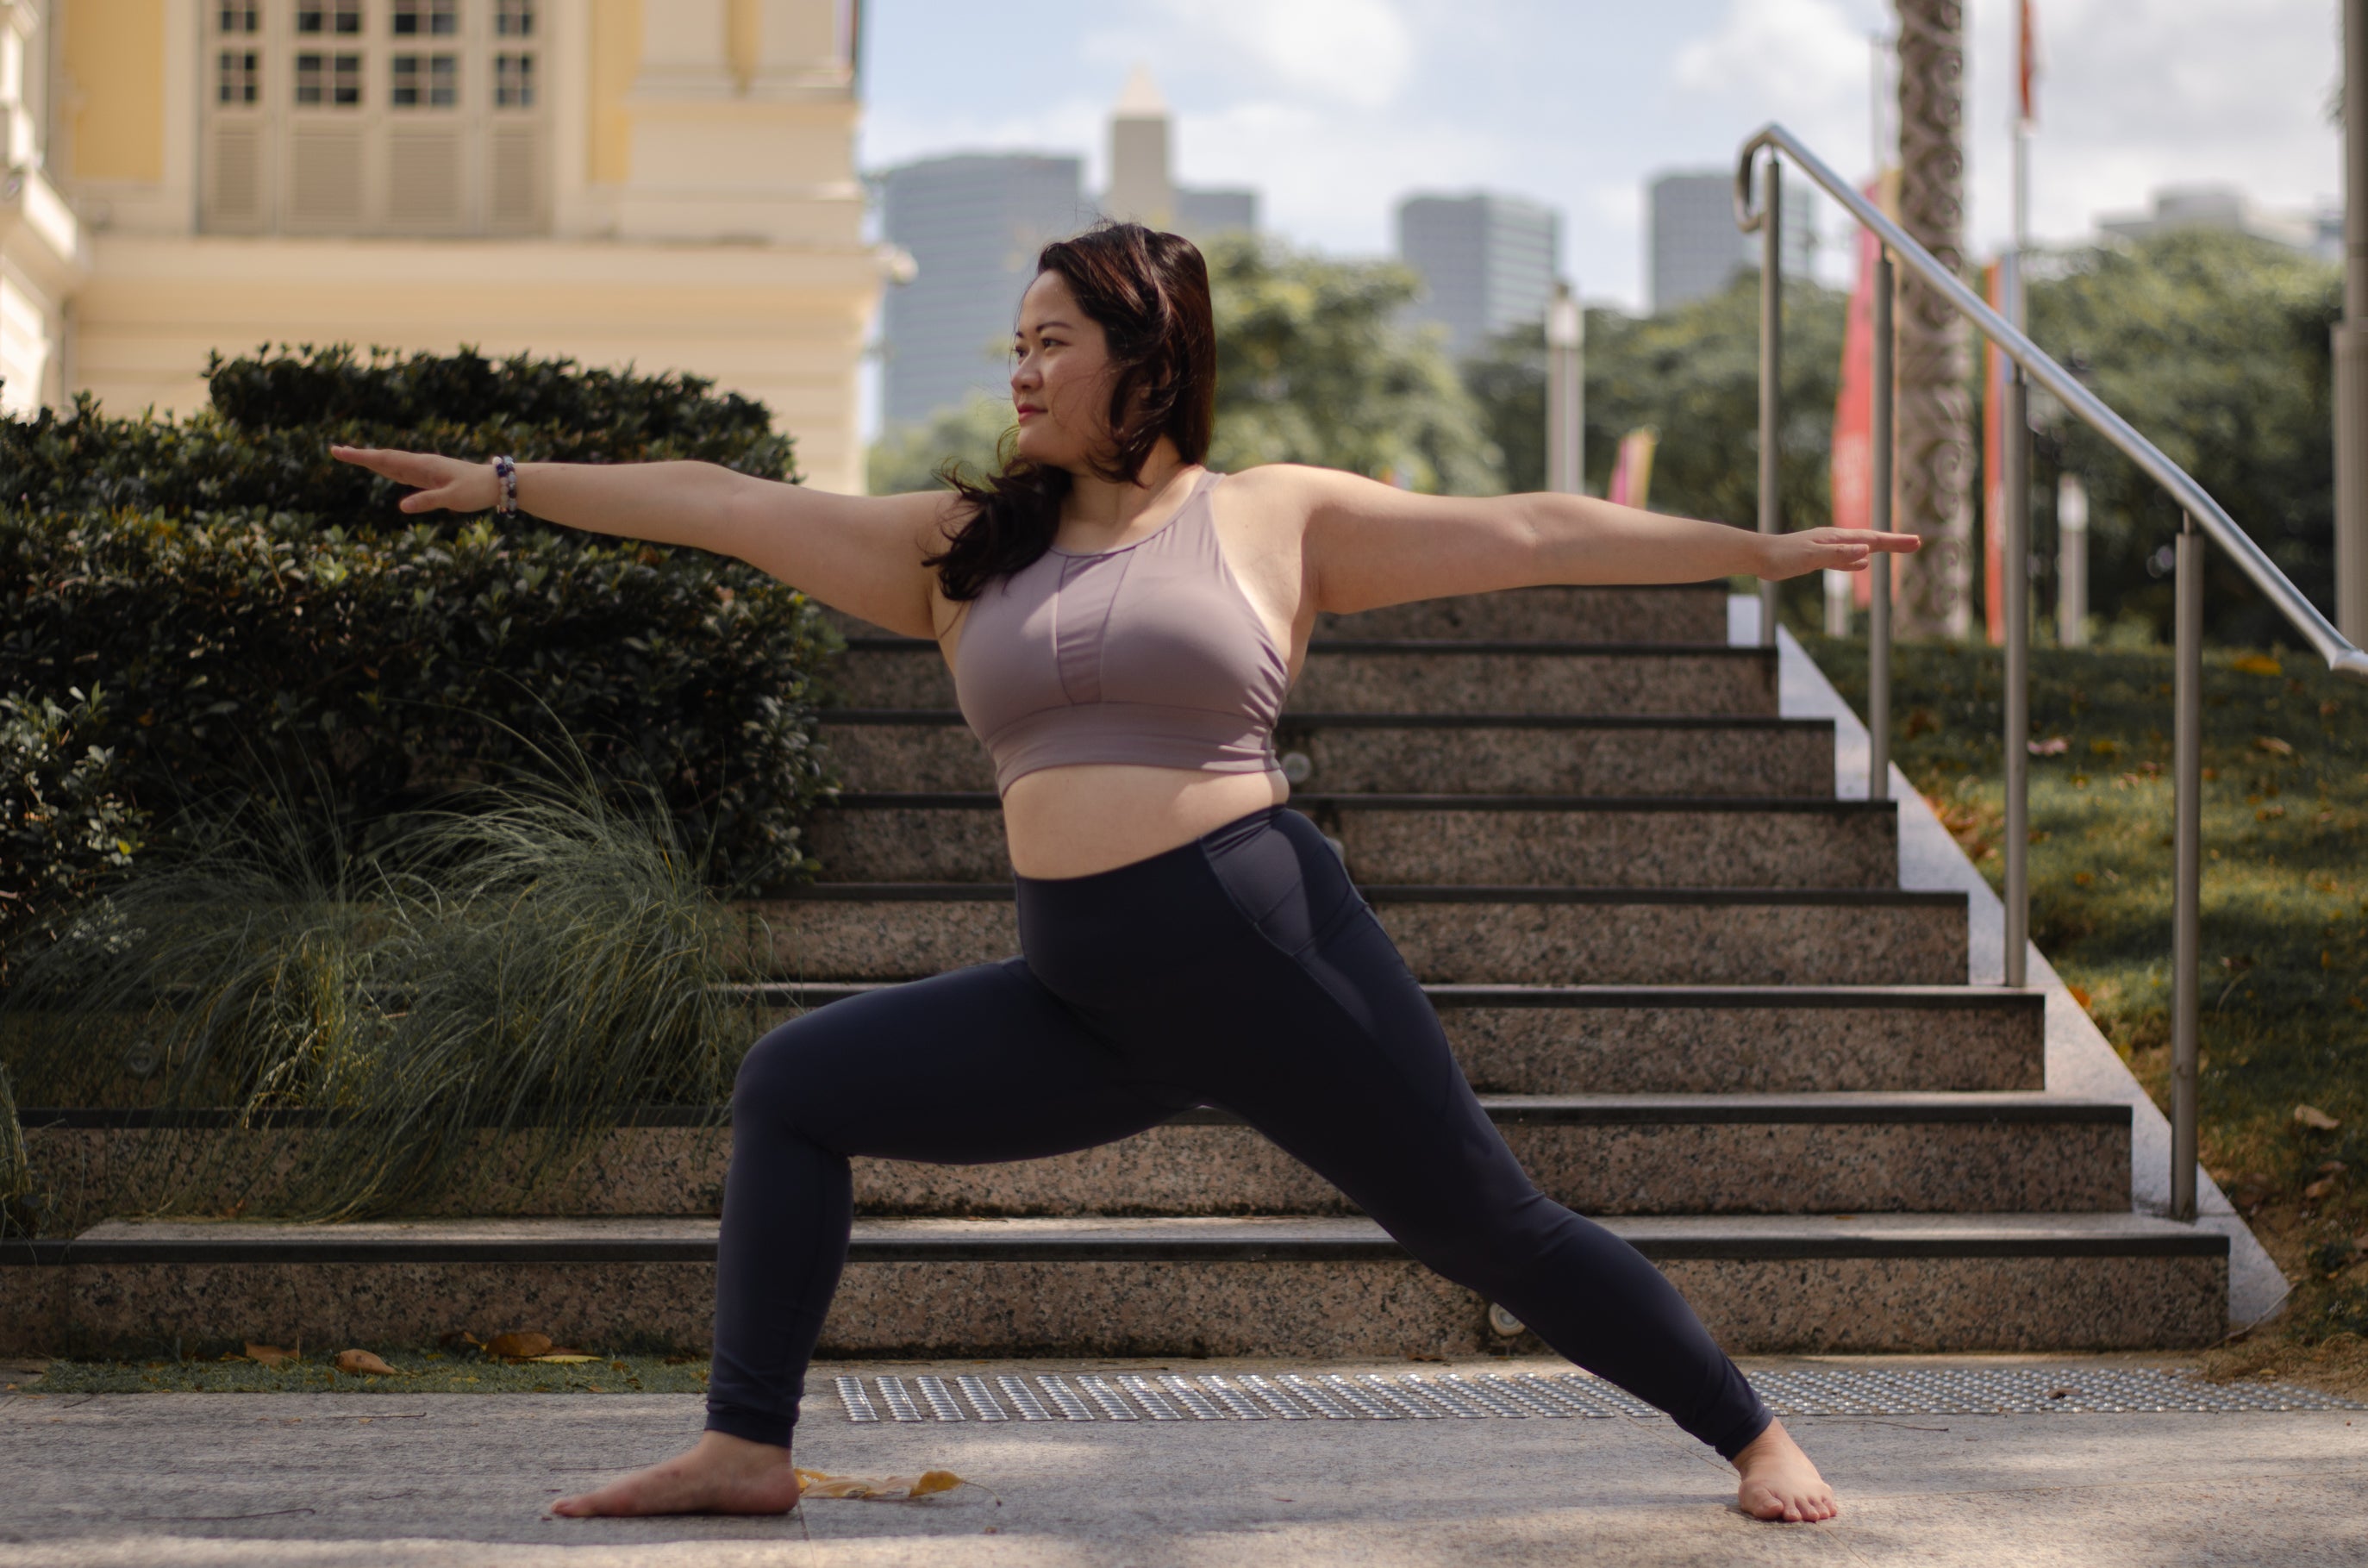 Chat with Li Tin: On Yoga & Body Image